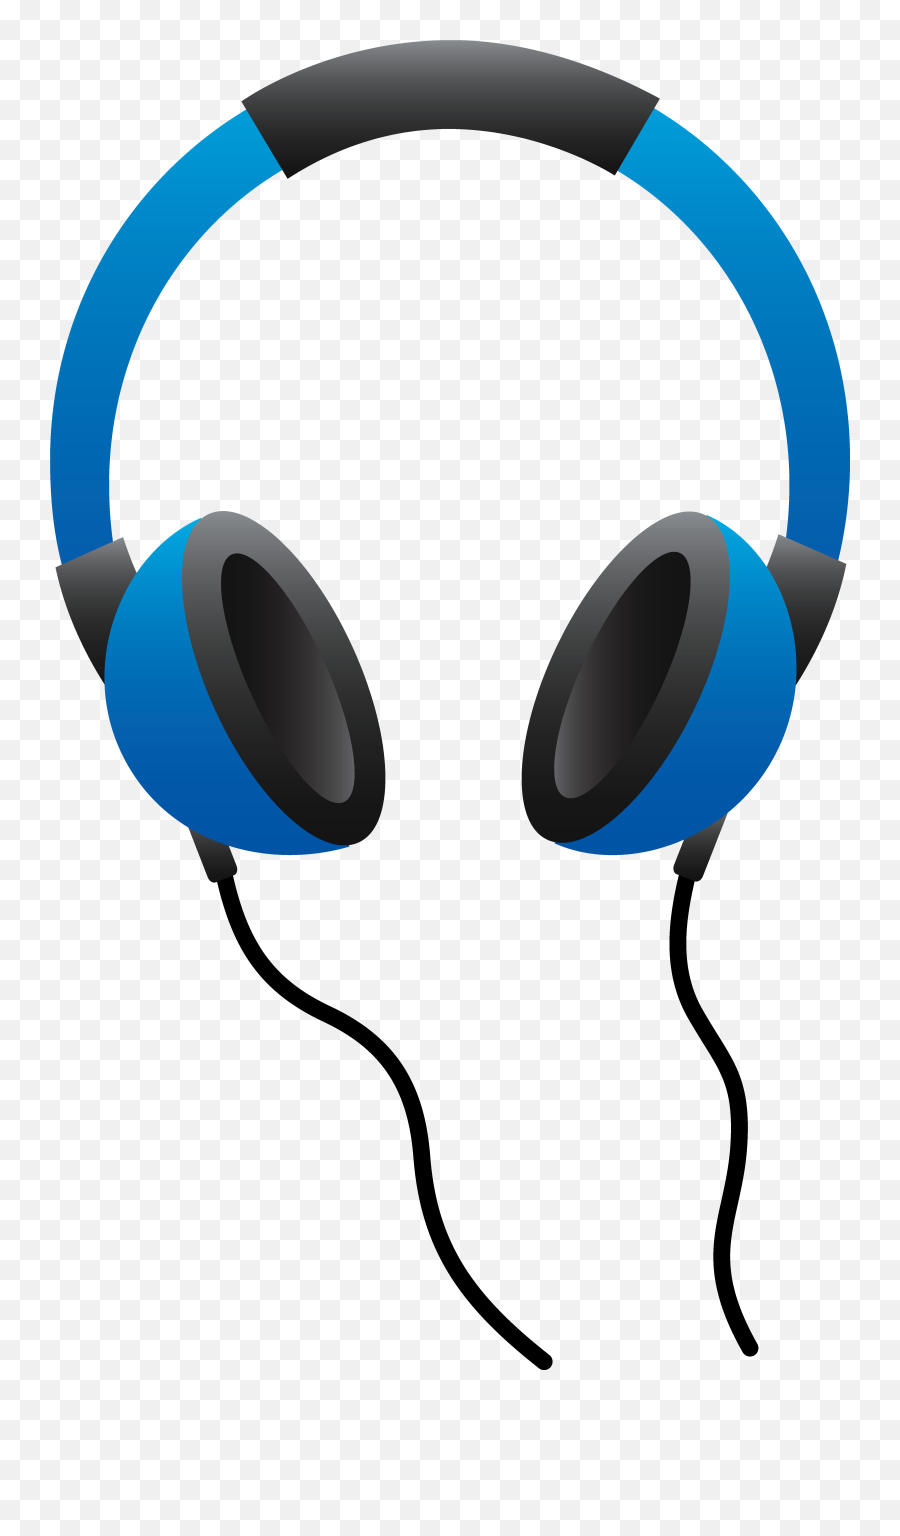 Colorful Big Headphones Clipart Free Image Download Emoji,Facebook Headphones Emoticon